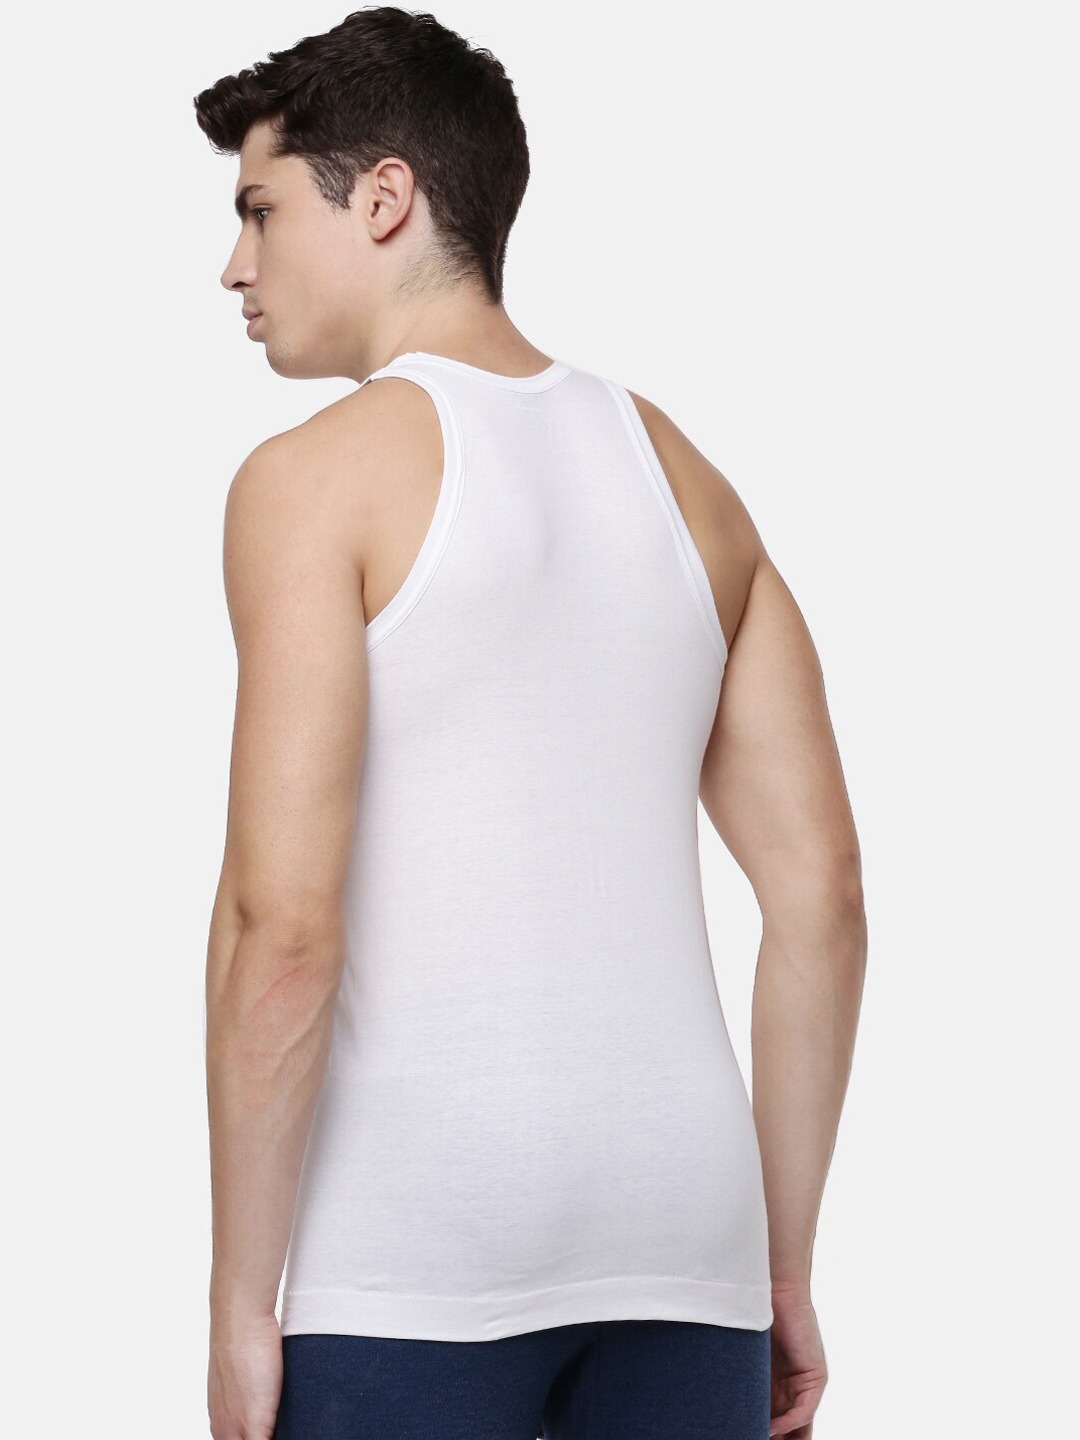 Clothing Innerwear Vests | Dollar Men Pack of 12 White Solid Innerwear Vest MLHVE-01-PO12 - DW21458